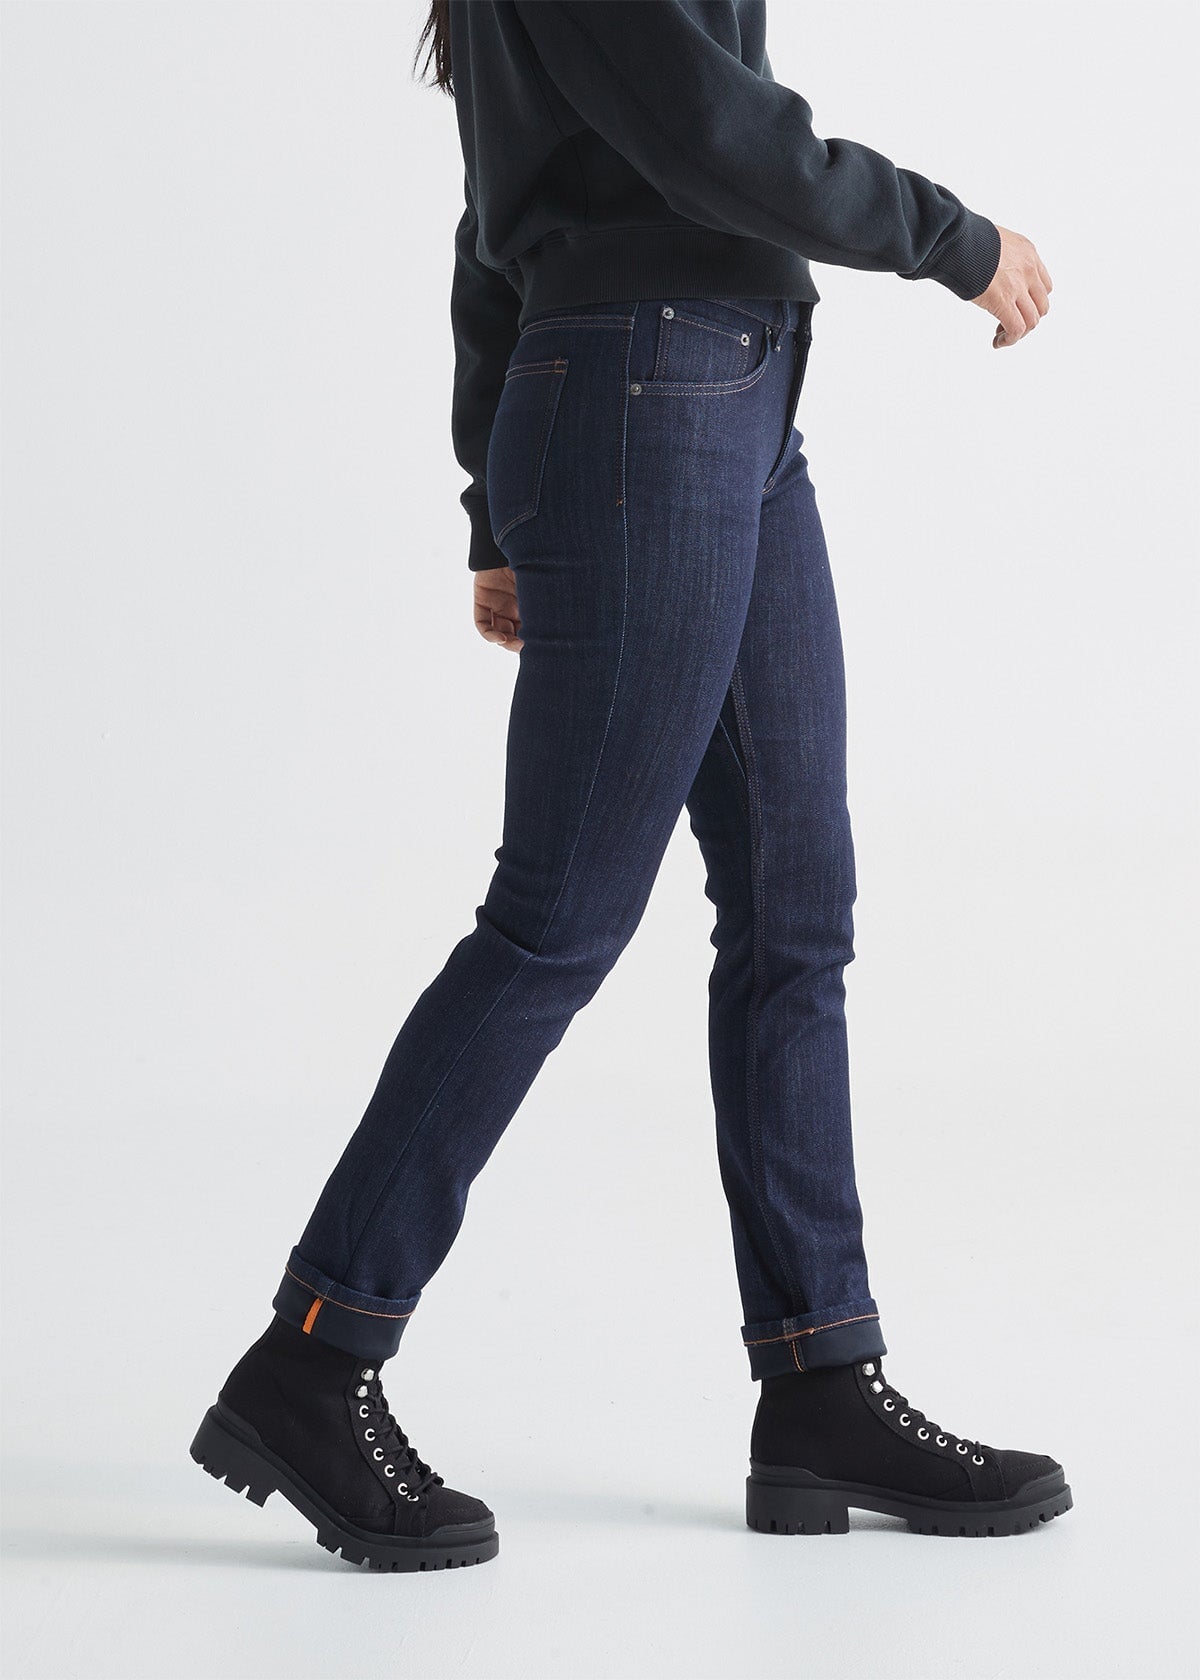 Women's Everyday Skinny Jeans / Ladies' Versatile Slim Denim / Female Slim  Fit Essentials